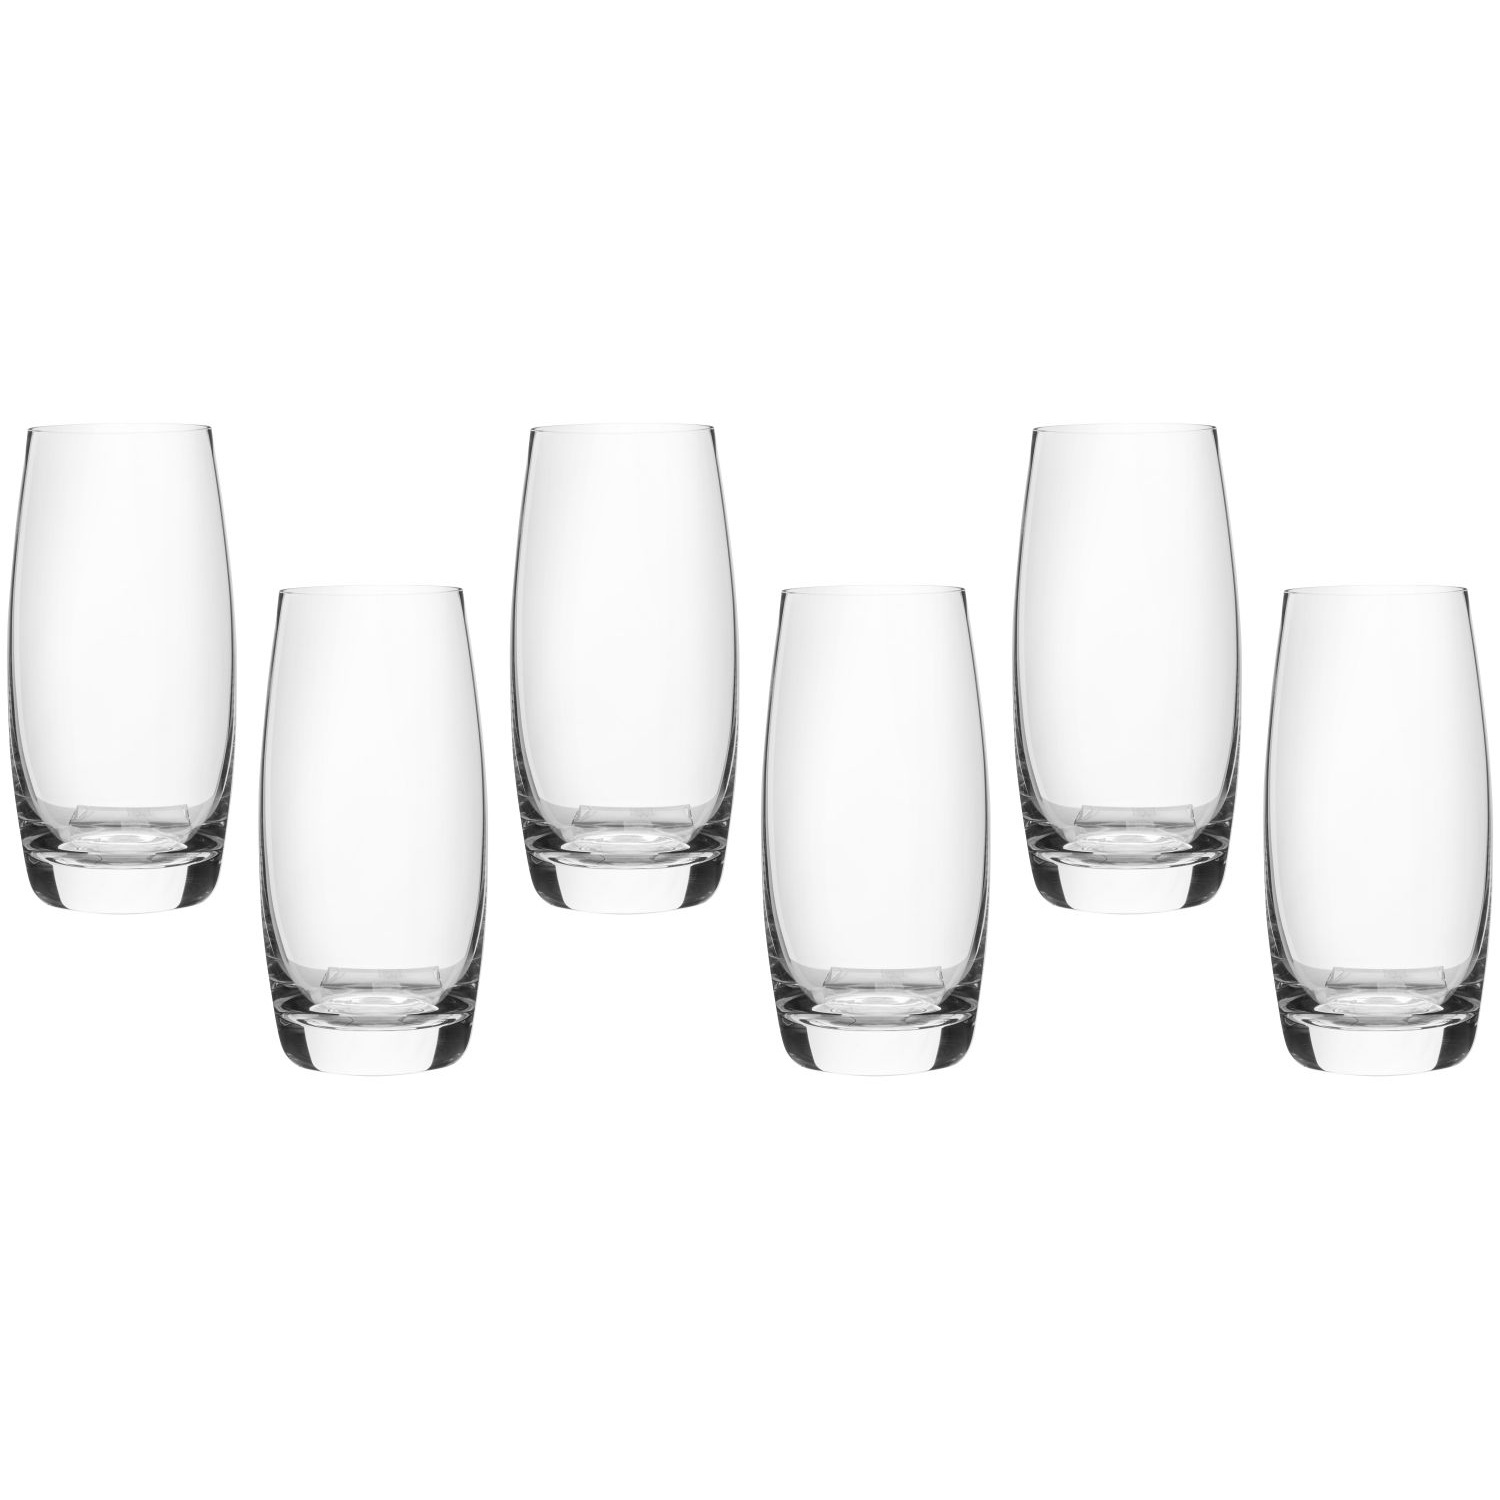 Набор стаканов Maxwell & Williams Cosmopolitan для воды 0,4 л набор высоких стаканов rcr bubble 2x360мл